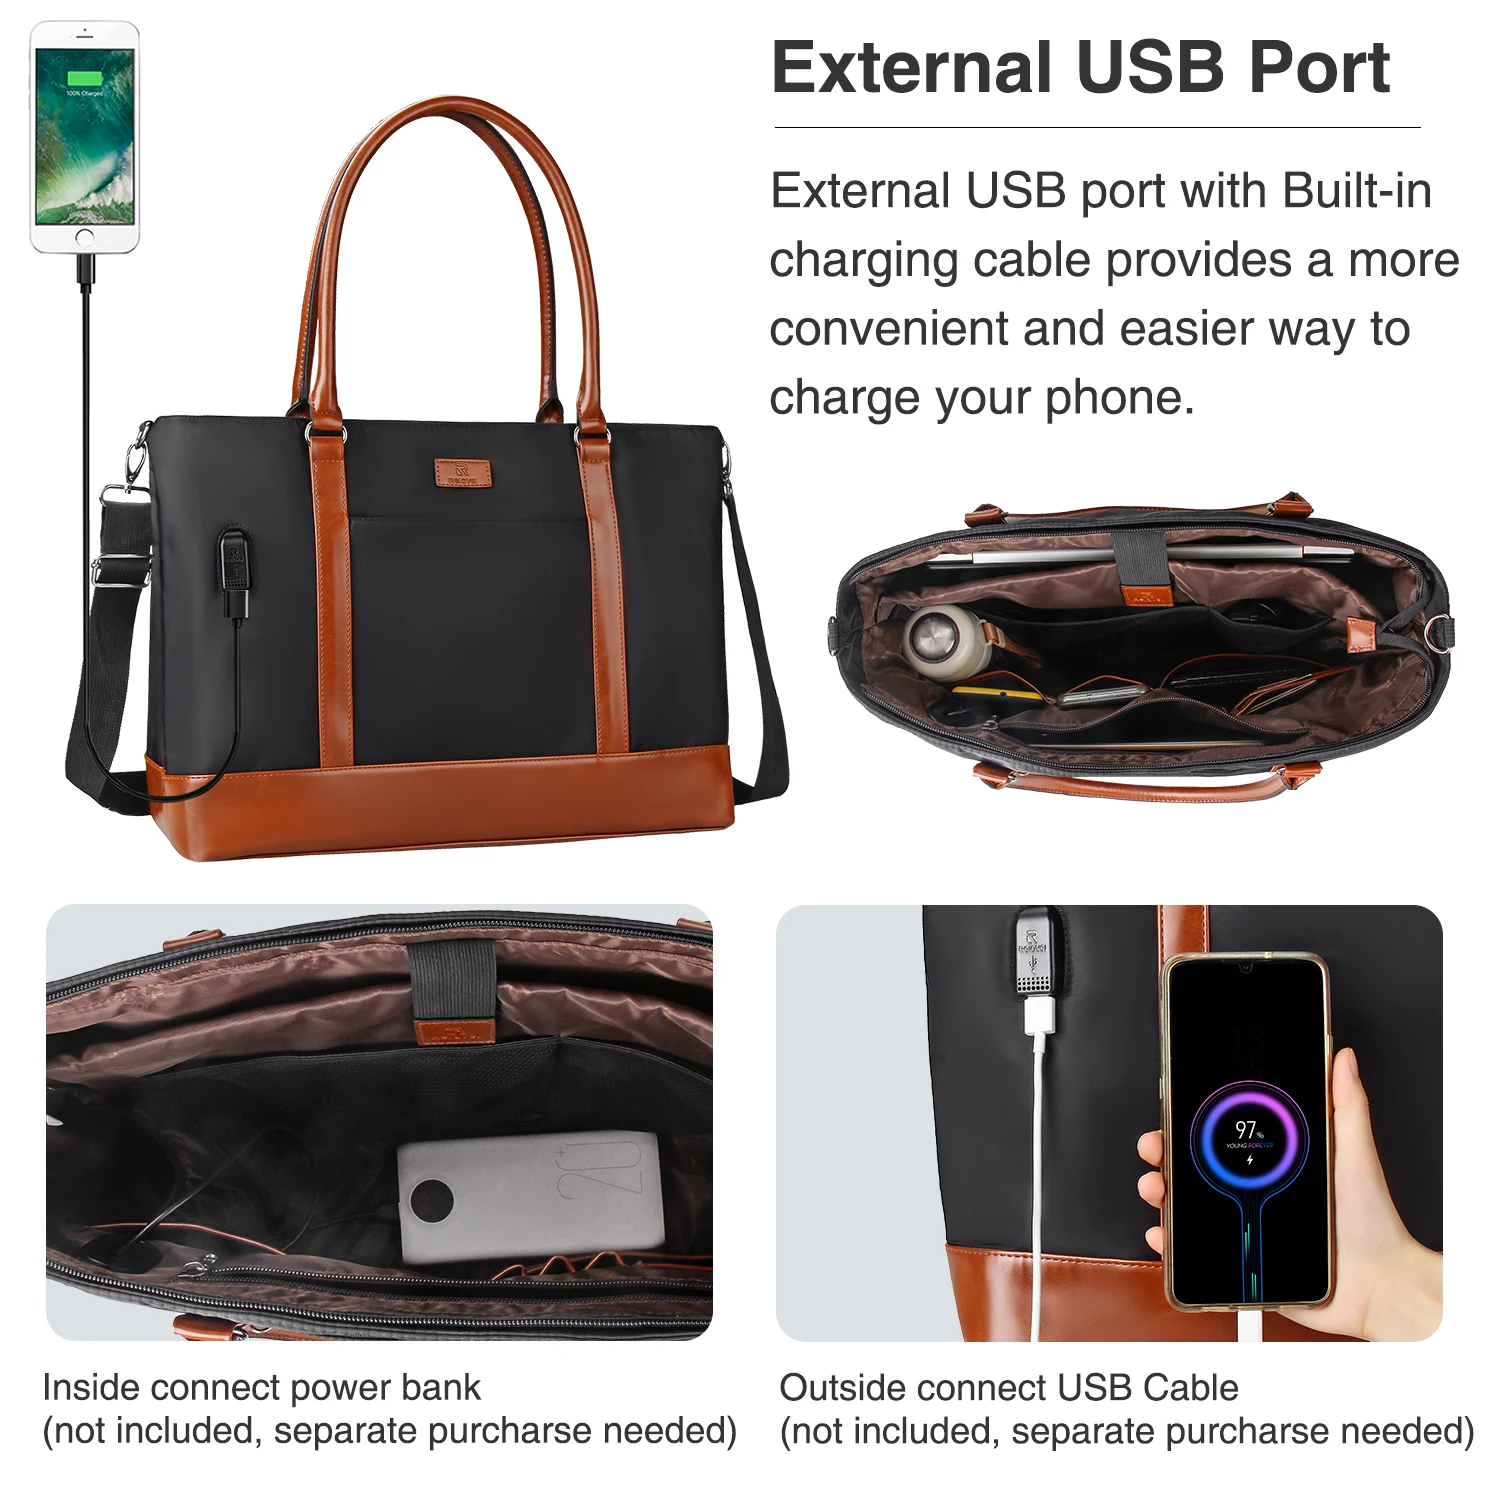 USB Laptop Tote Bag 15.6 inch Black – Relavel